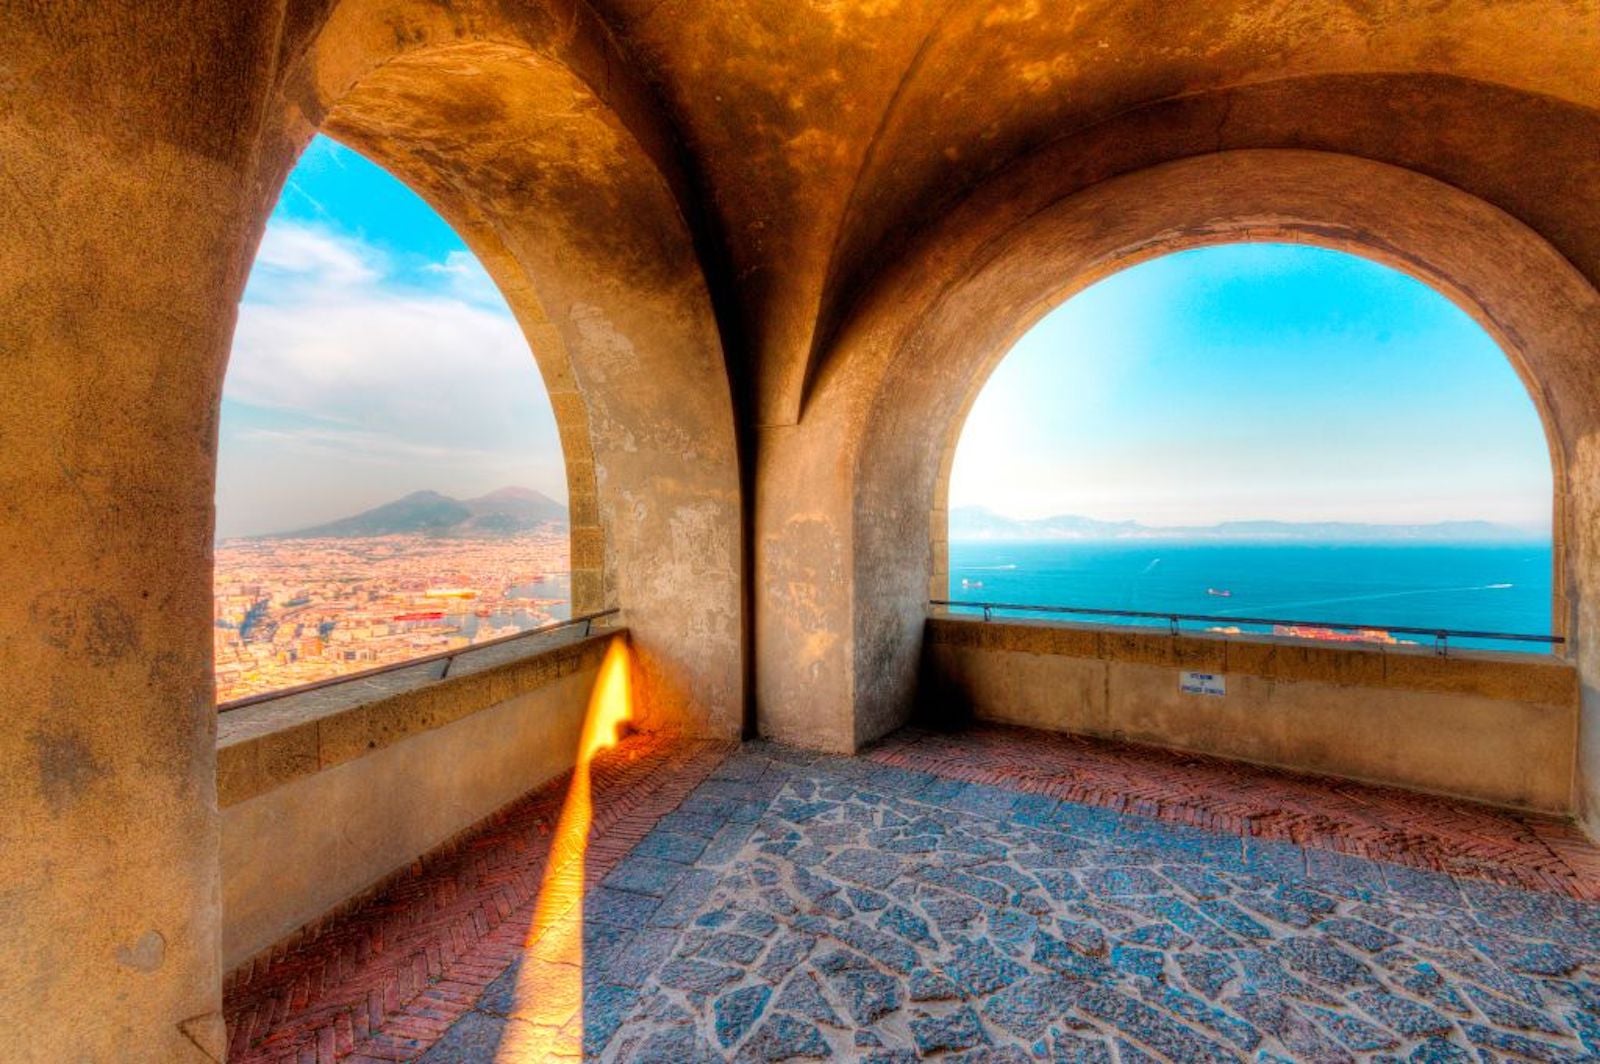 Italy, Campania, Naples, cityscape from Castel Sant'Elmo, Vesuvius in background